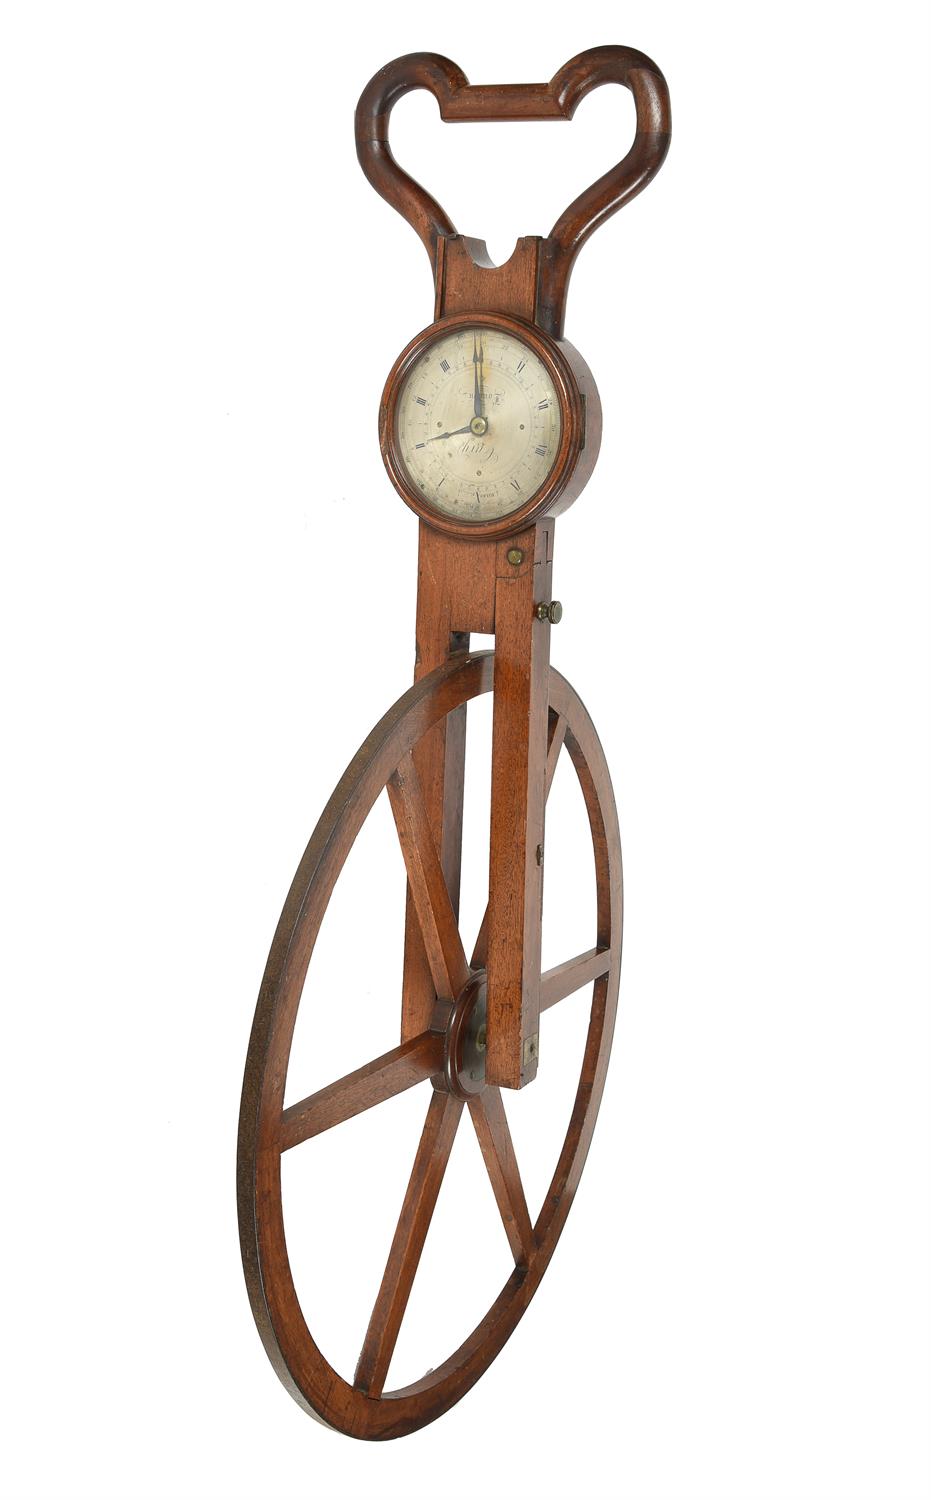 A rare George III mahogany hodometer or waywiser